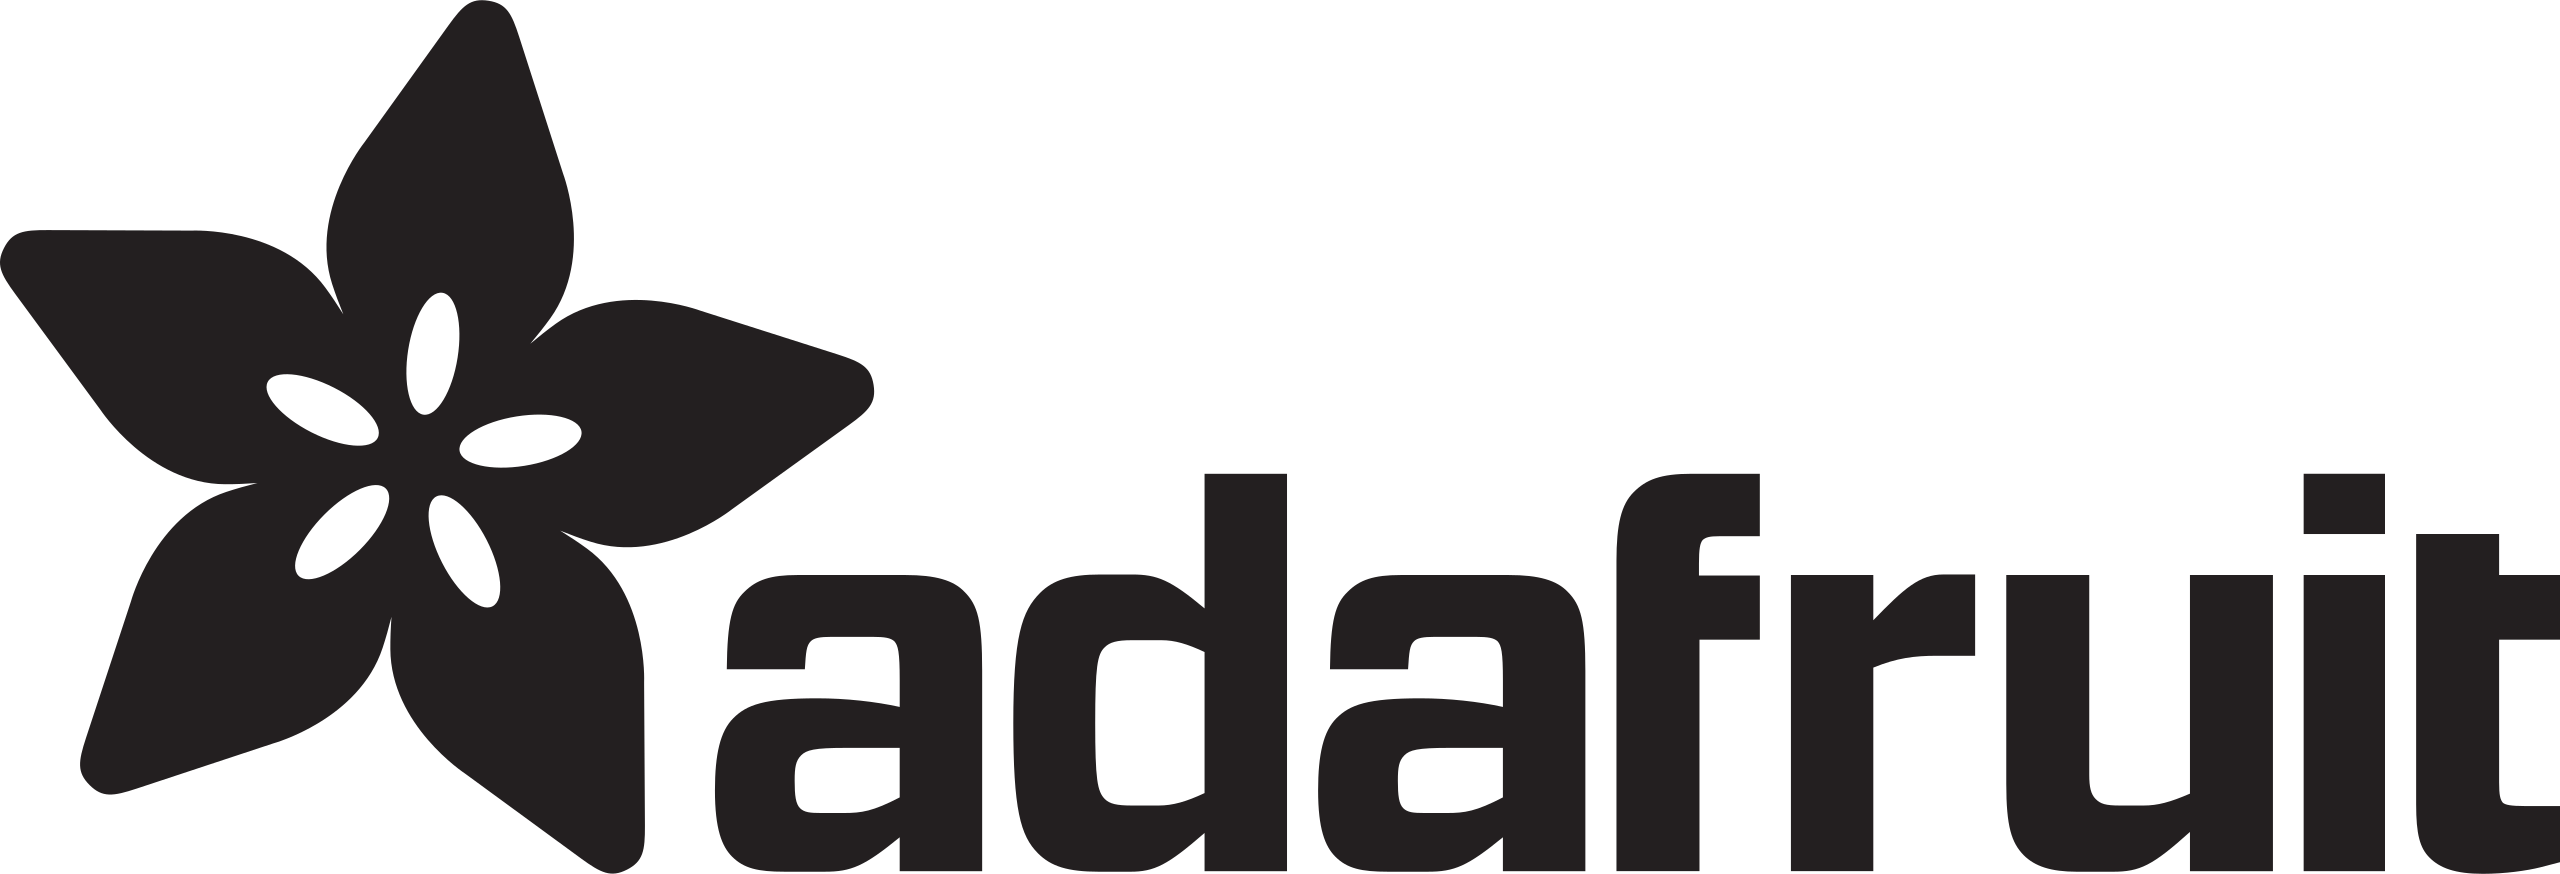 Adafruit_logo.svg